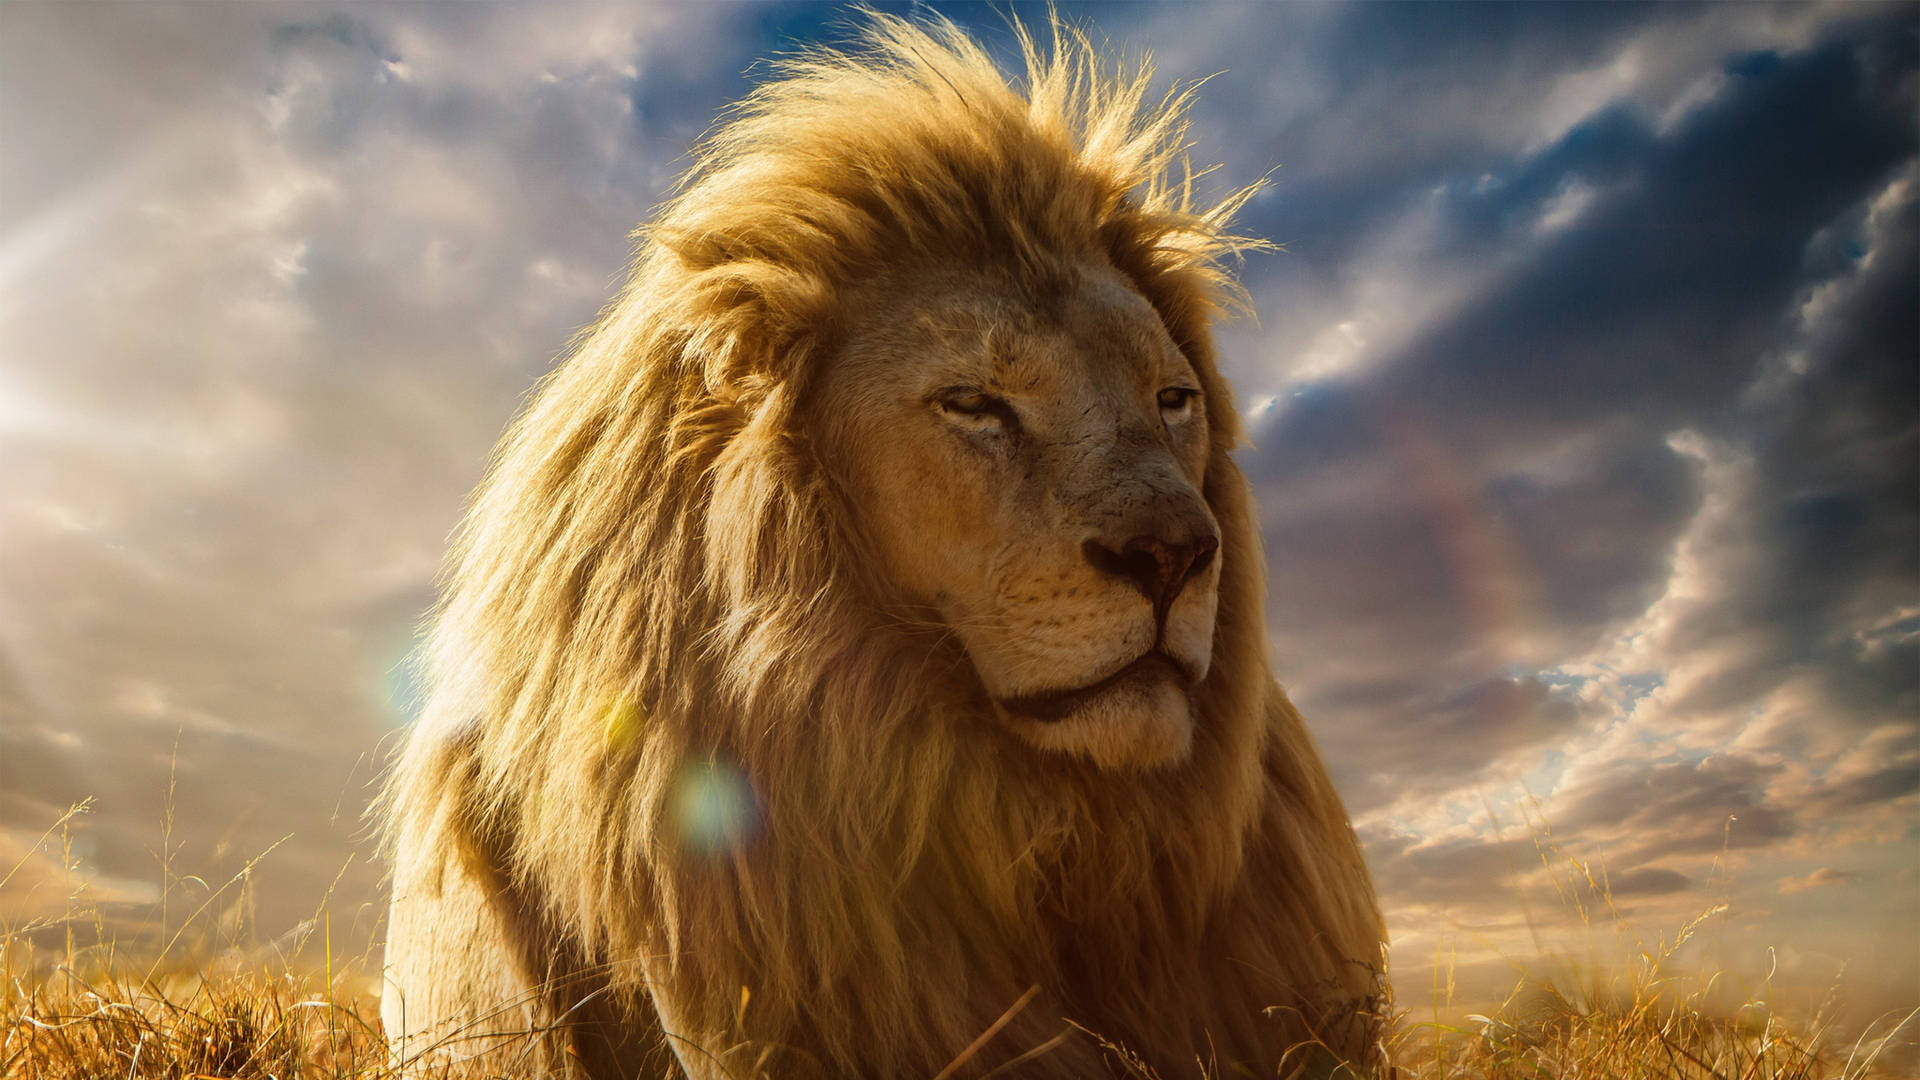 In Sunlight Lion Desktop Wallpaper